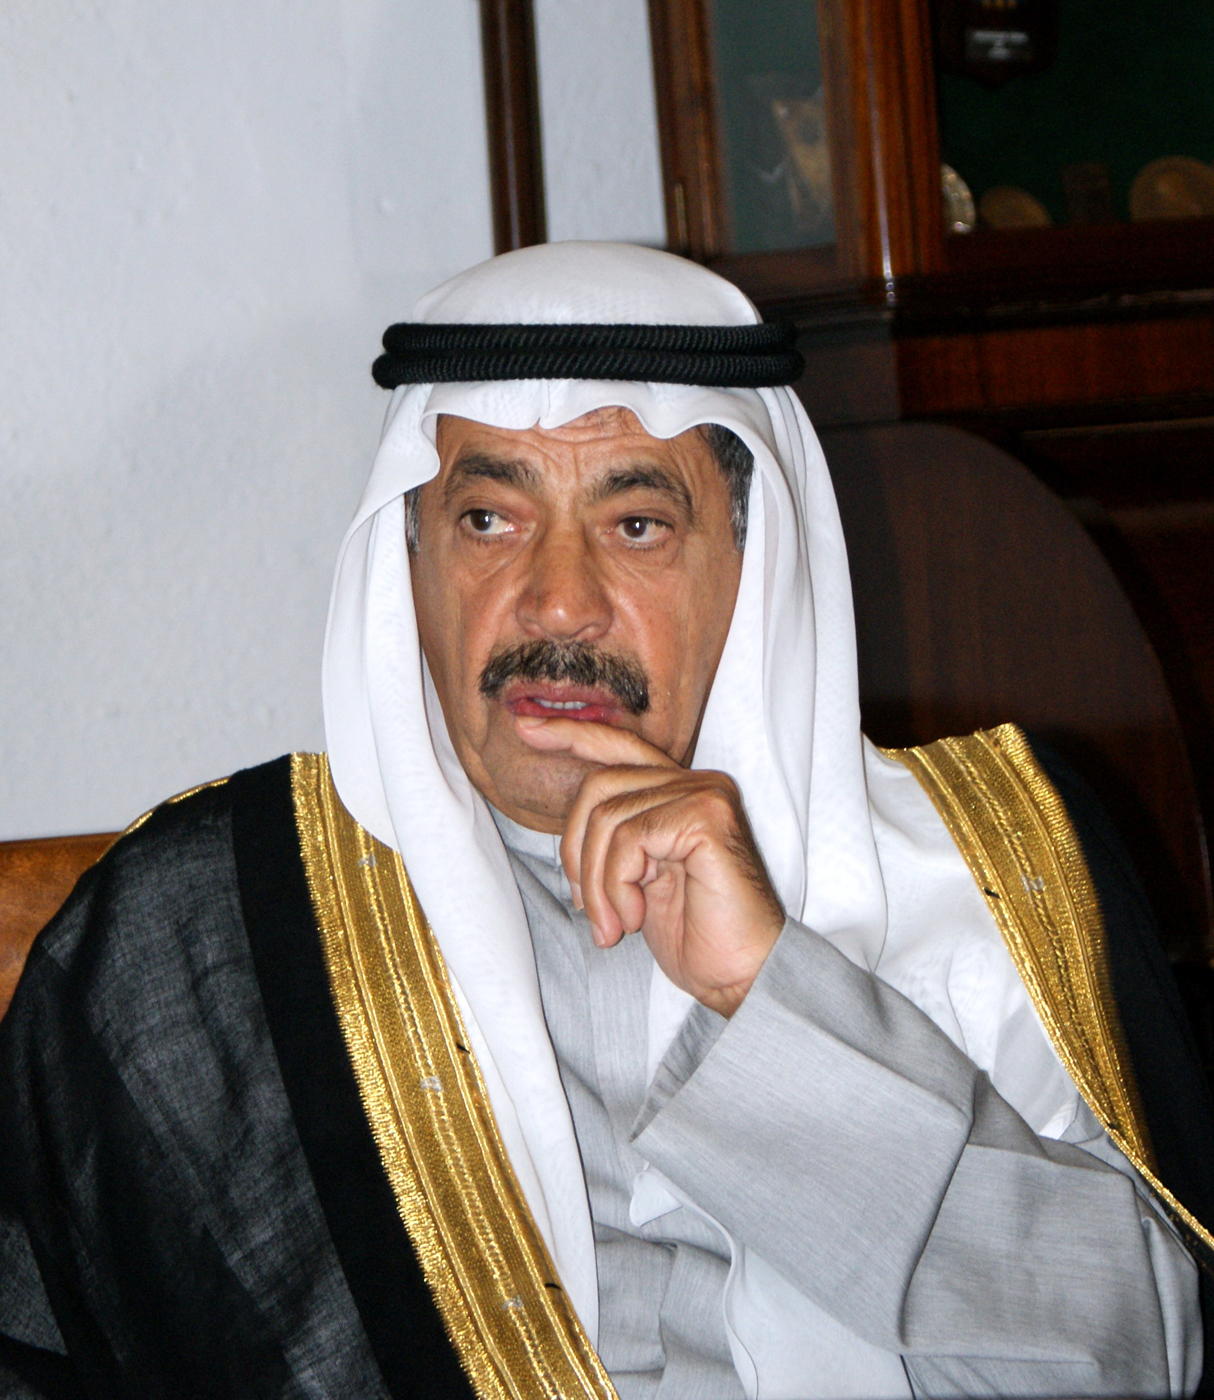 Kuwaiti poet Abdulaziz Al-Babtain